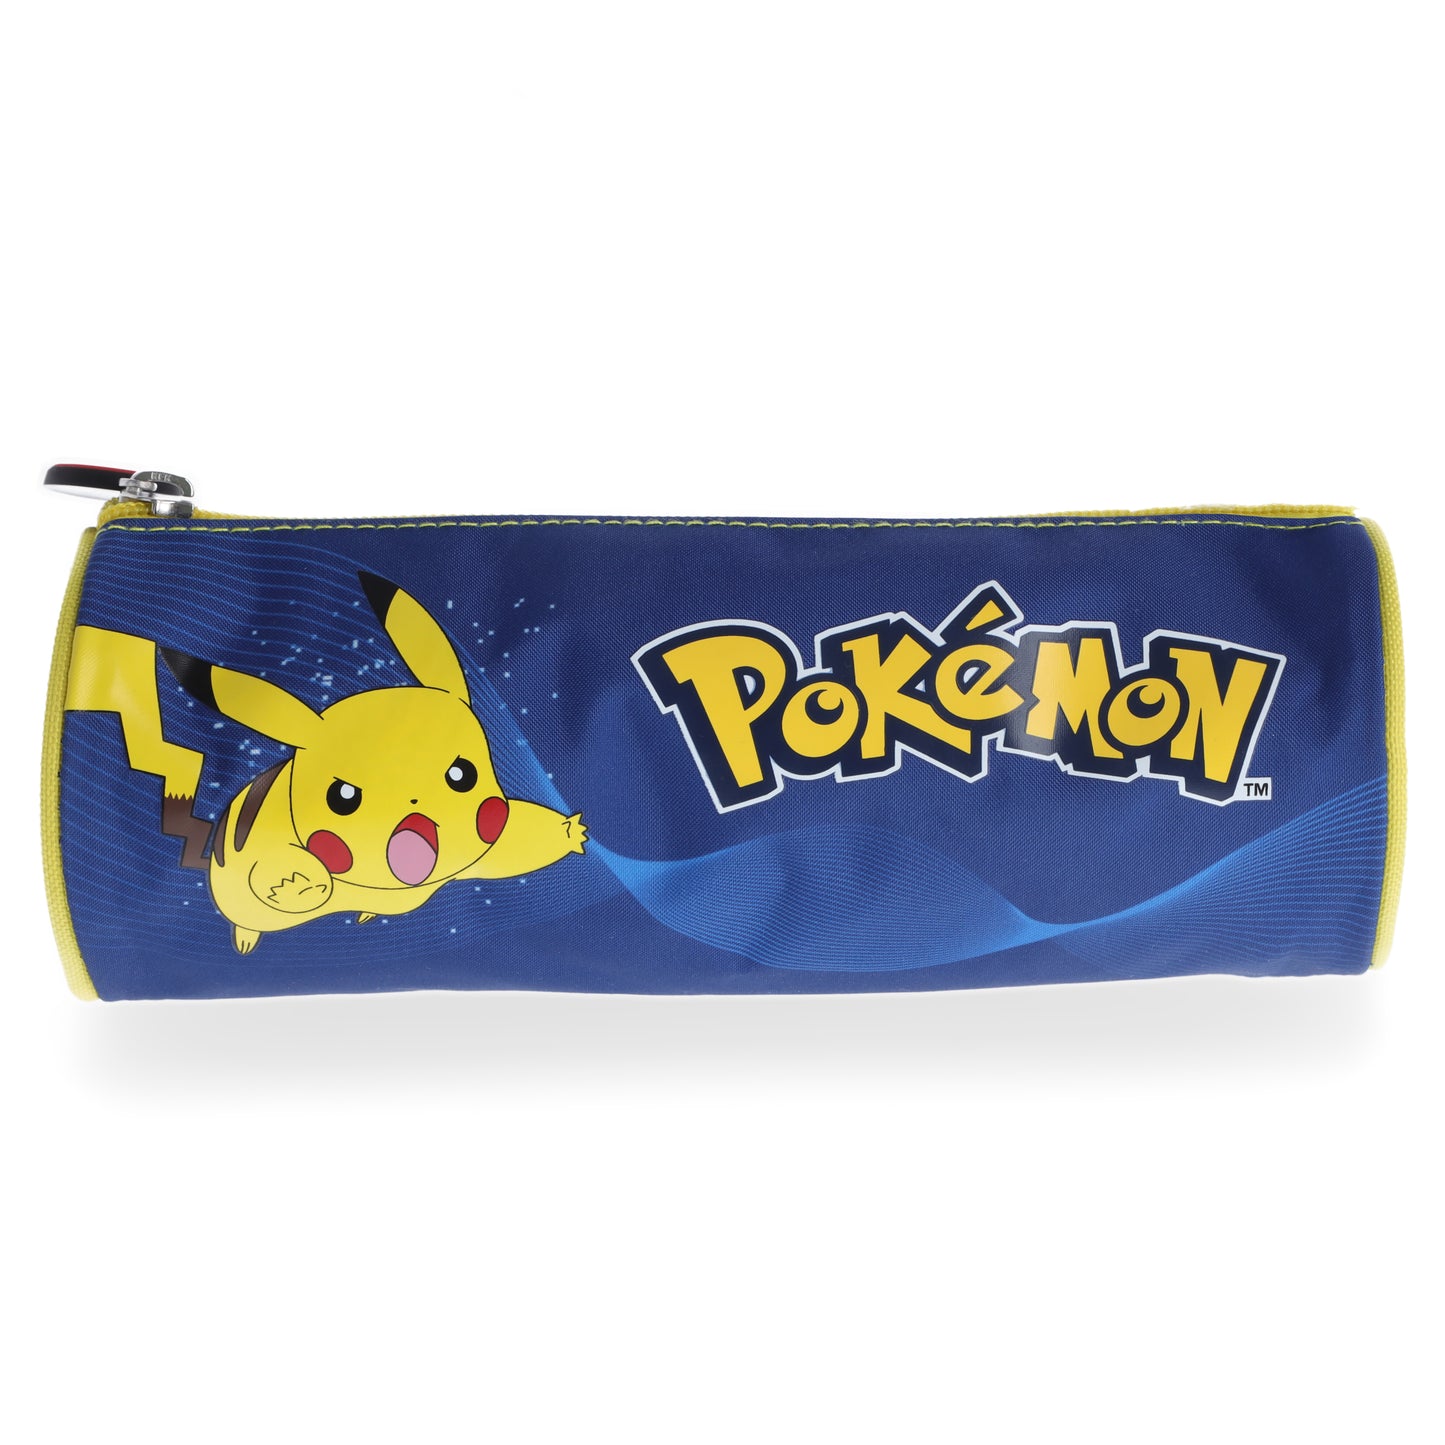 Pokémon pencil case - Pikachu